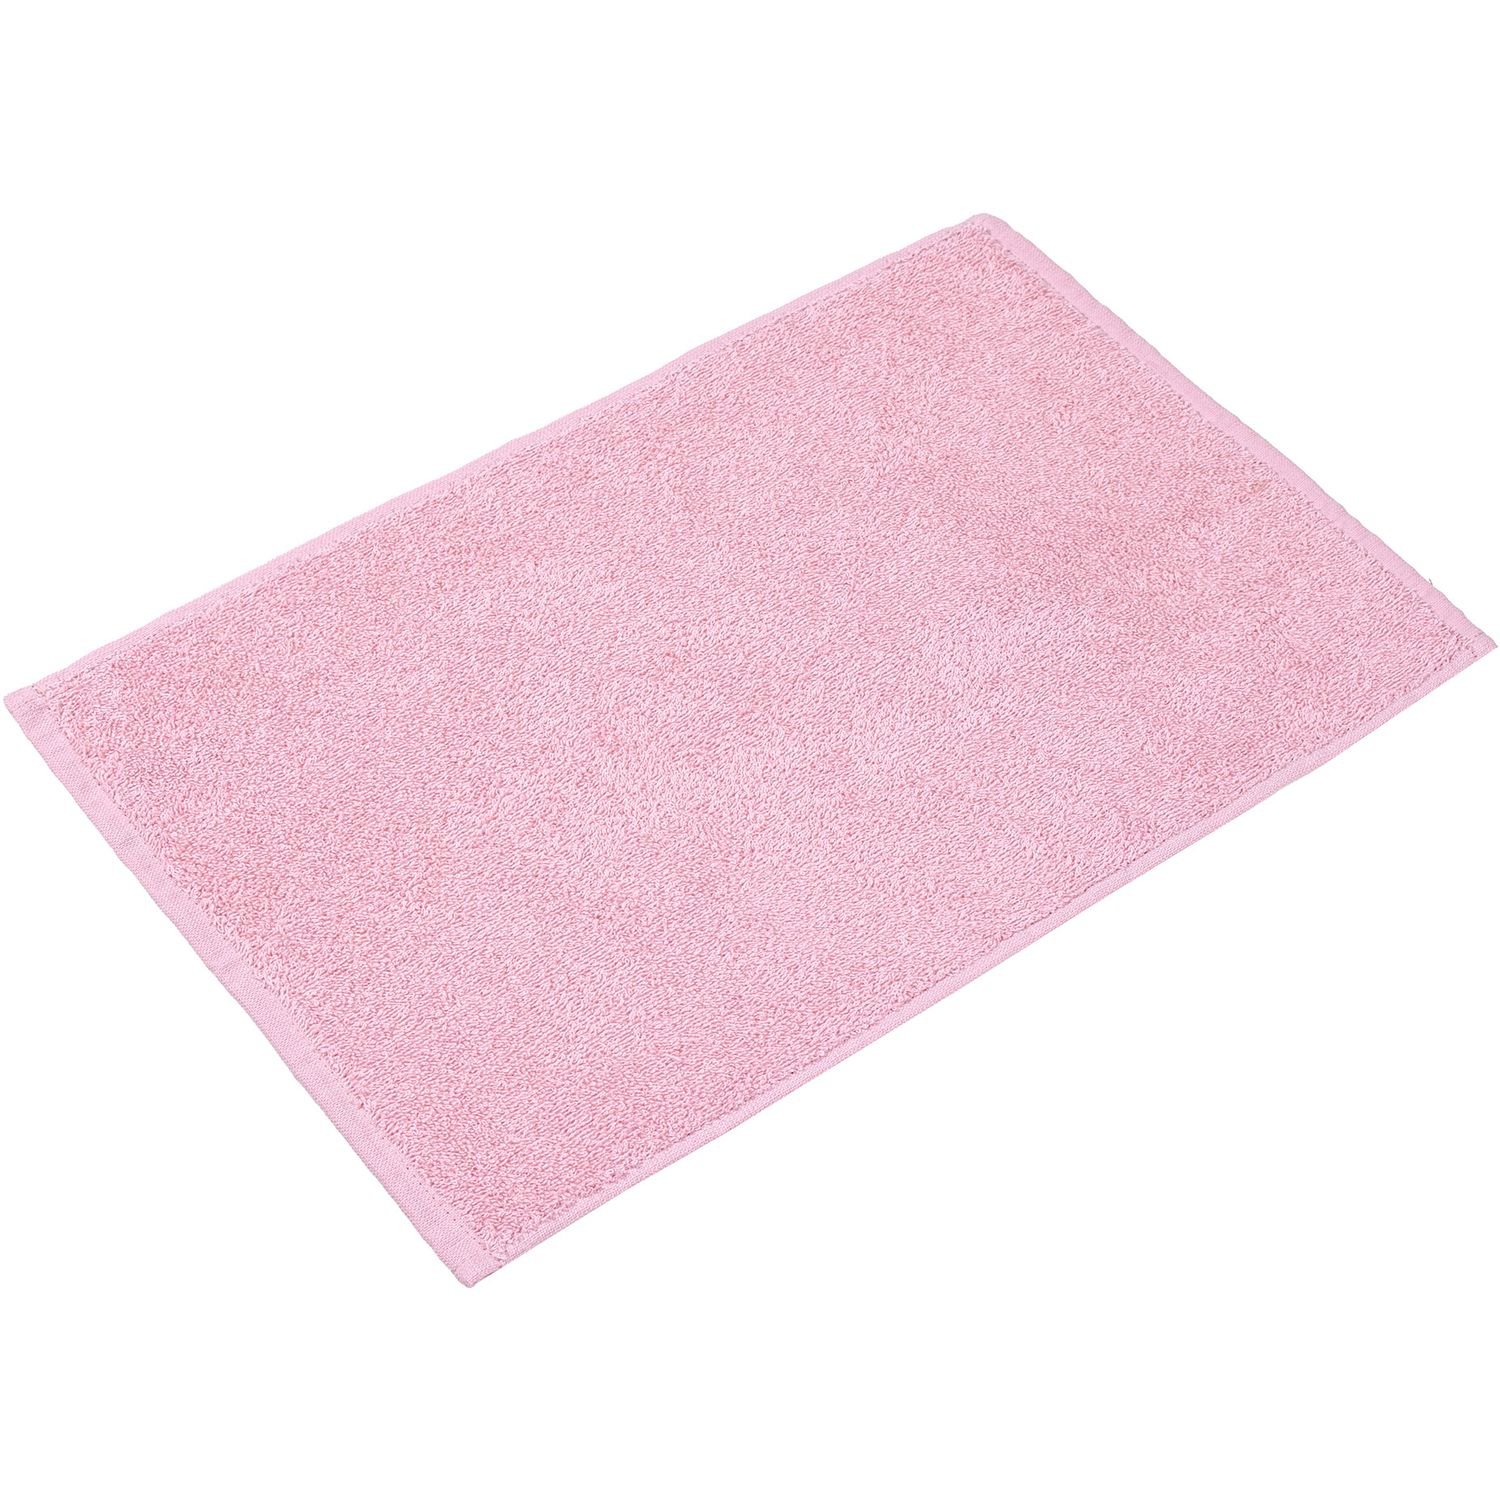 Полотенце (салфетка) Home Line махровое, 45х30 см, розовое (174526) - фото 1